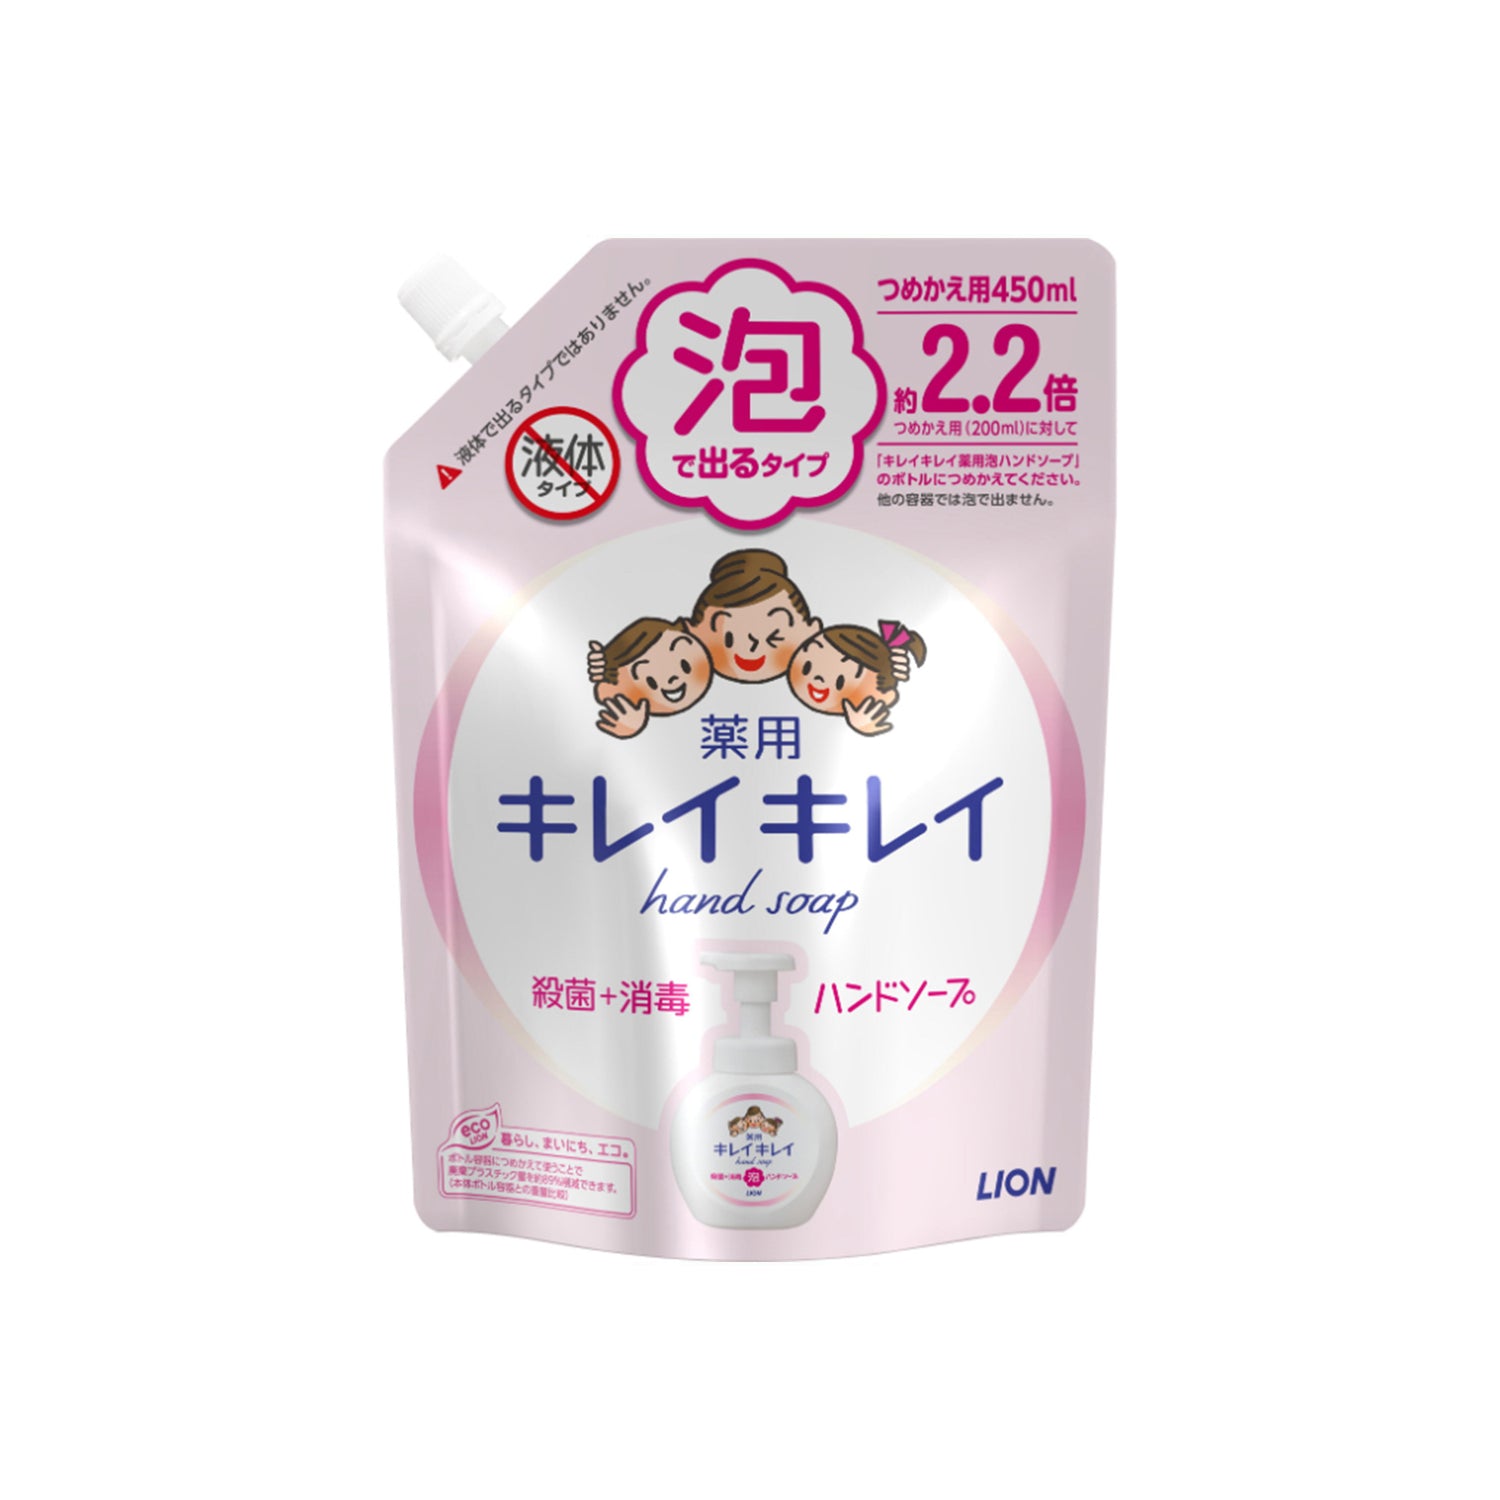 LION KireiKirei Foaming Hand Soap Refill 450ml